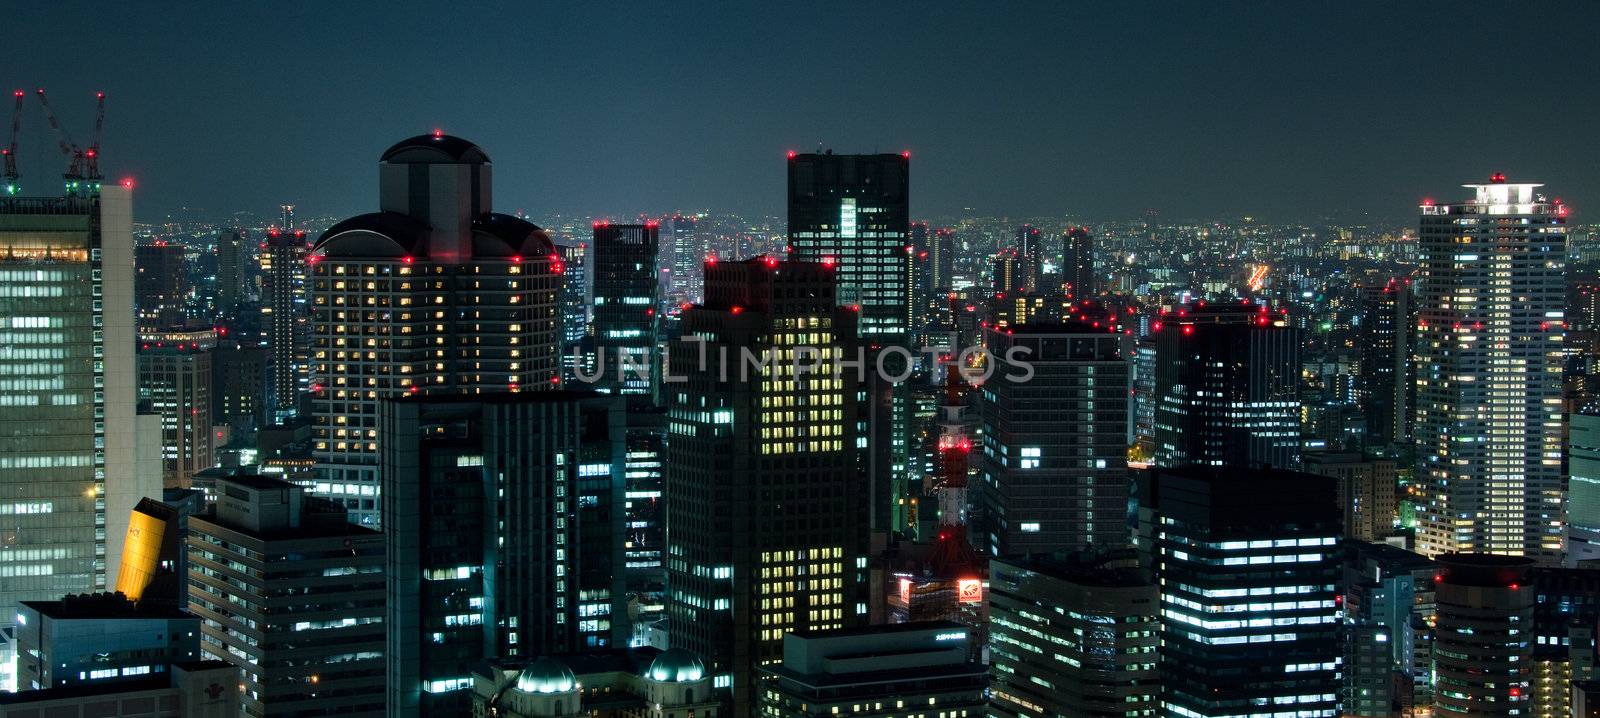 Osaka Skyline at night by Arrxxx